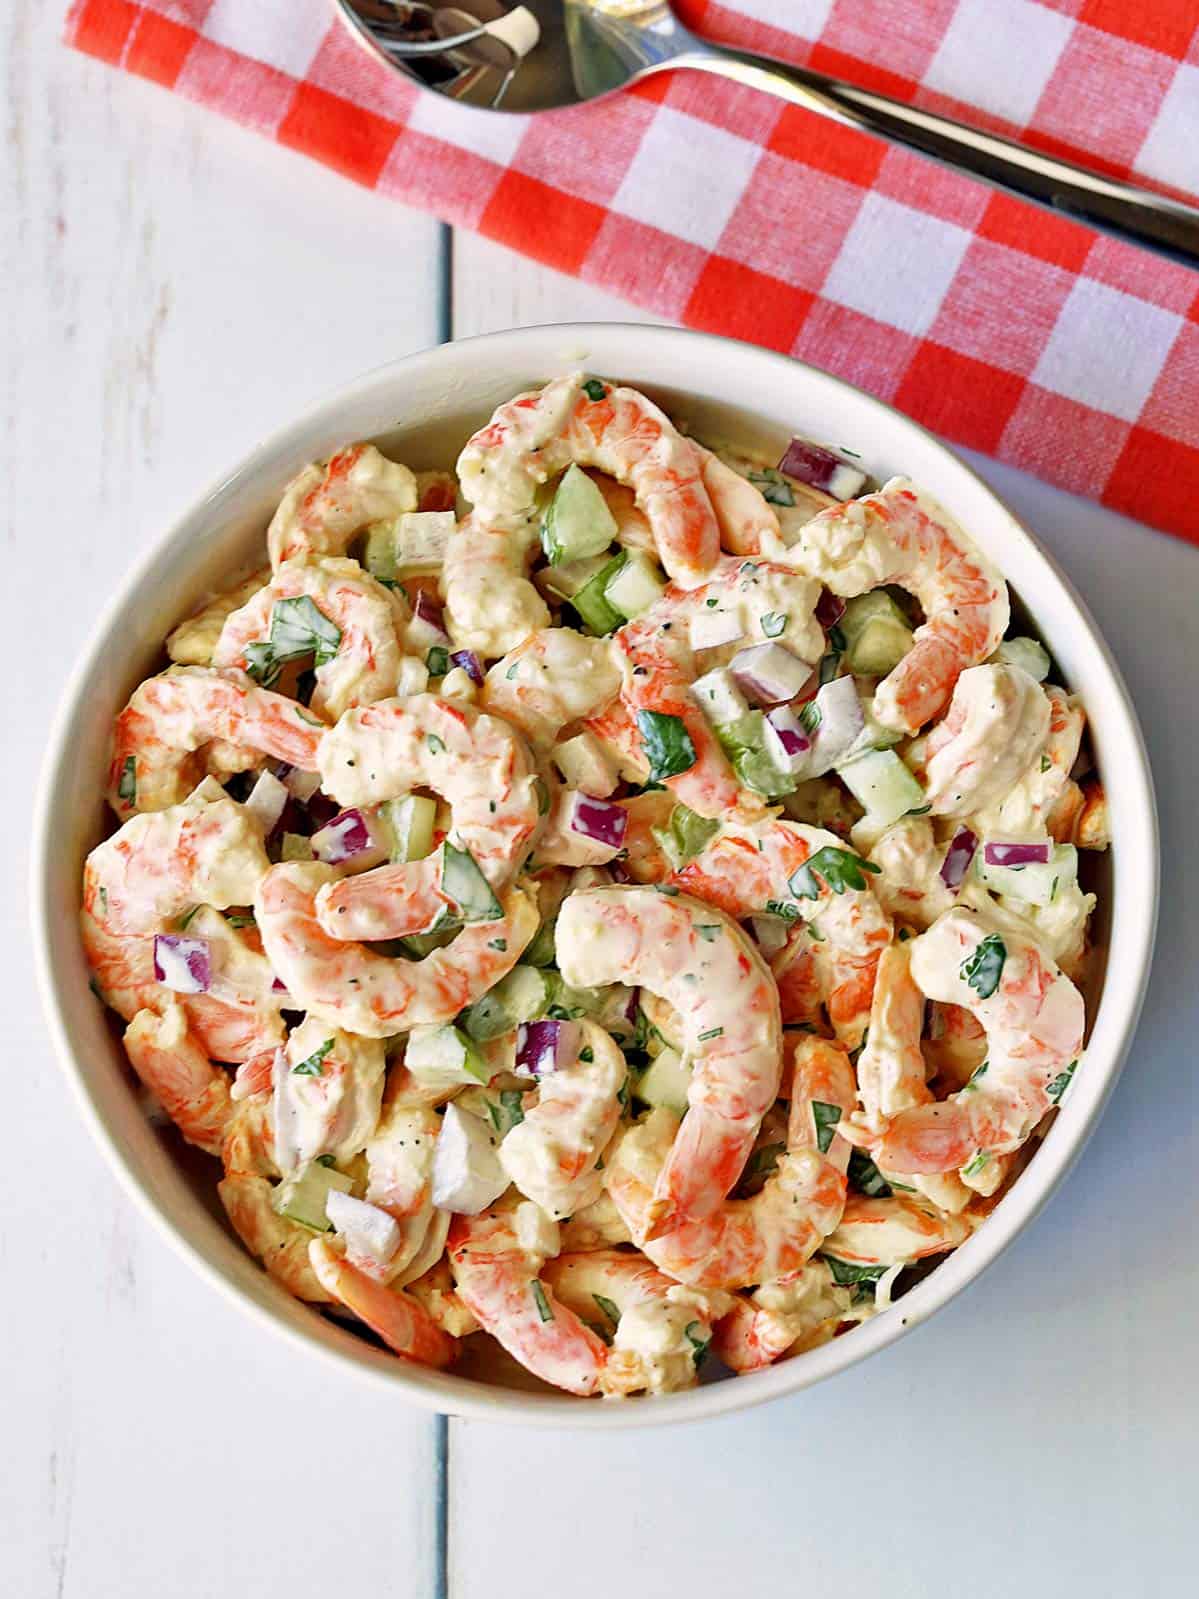 Shrimp salad is served in a white bowl.